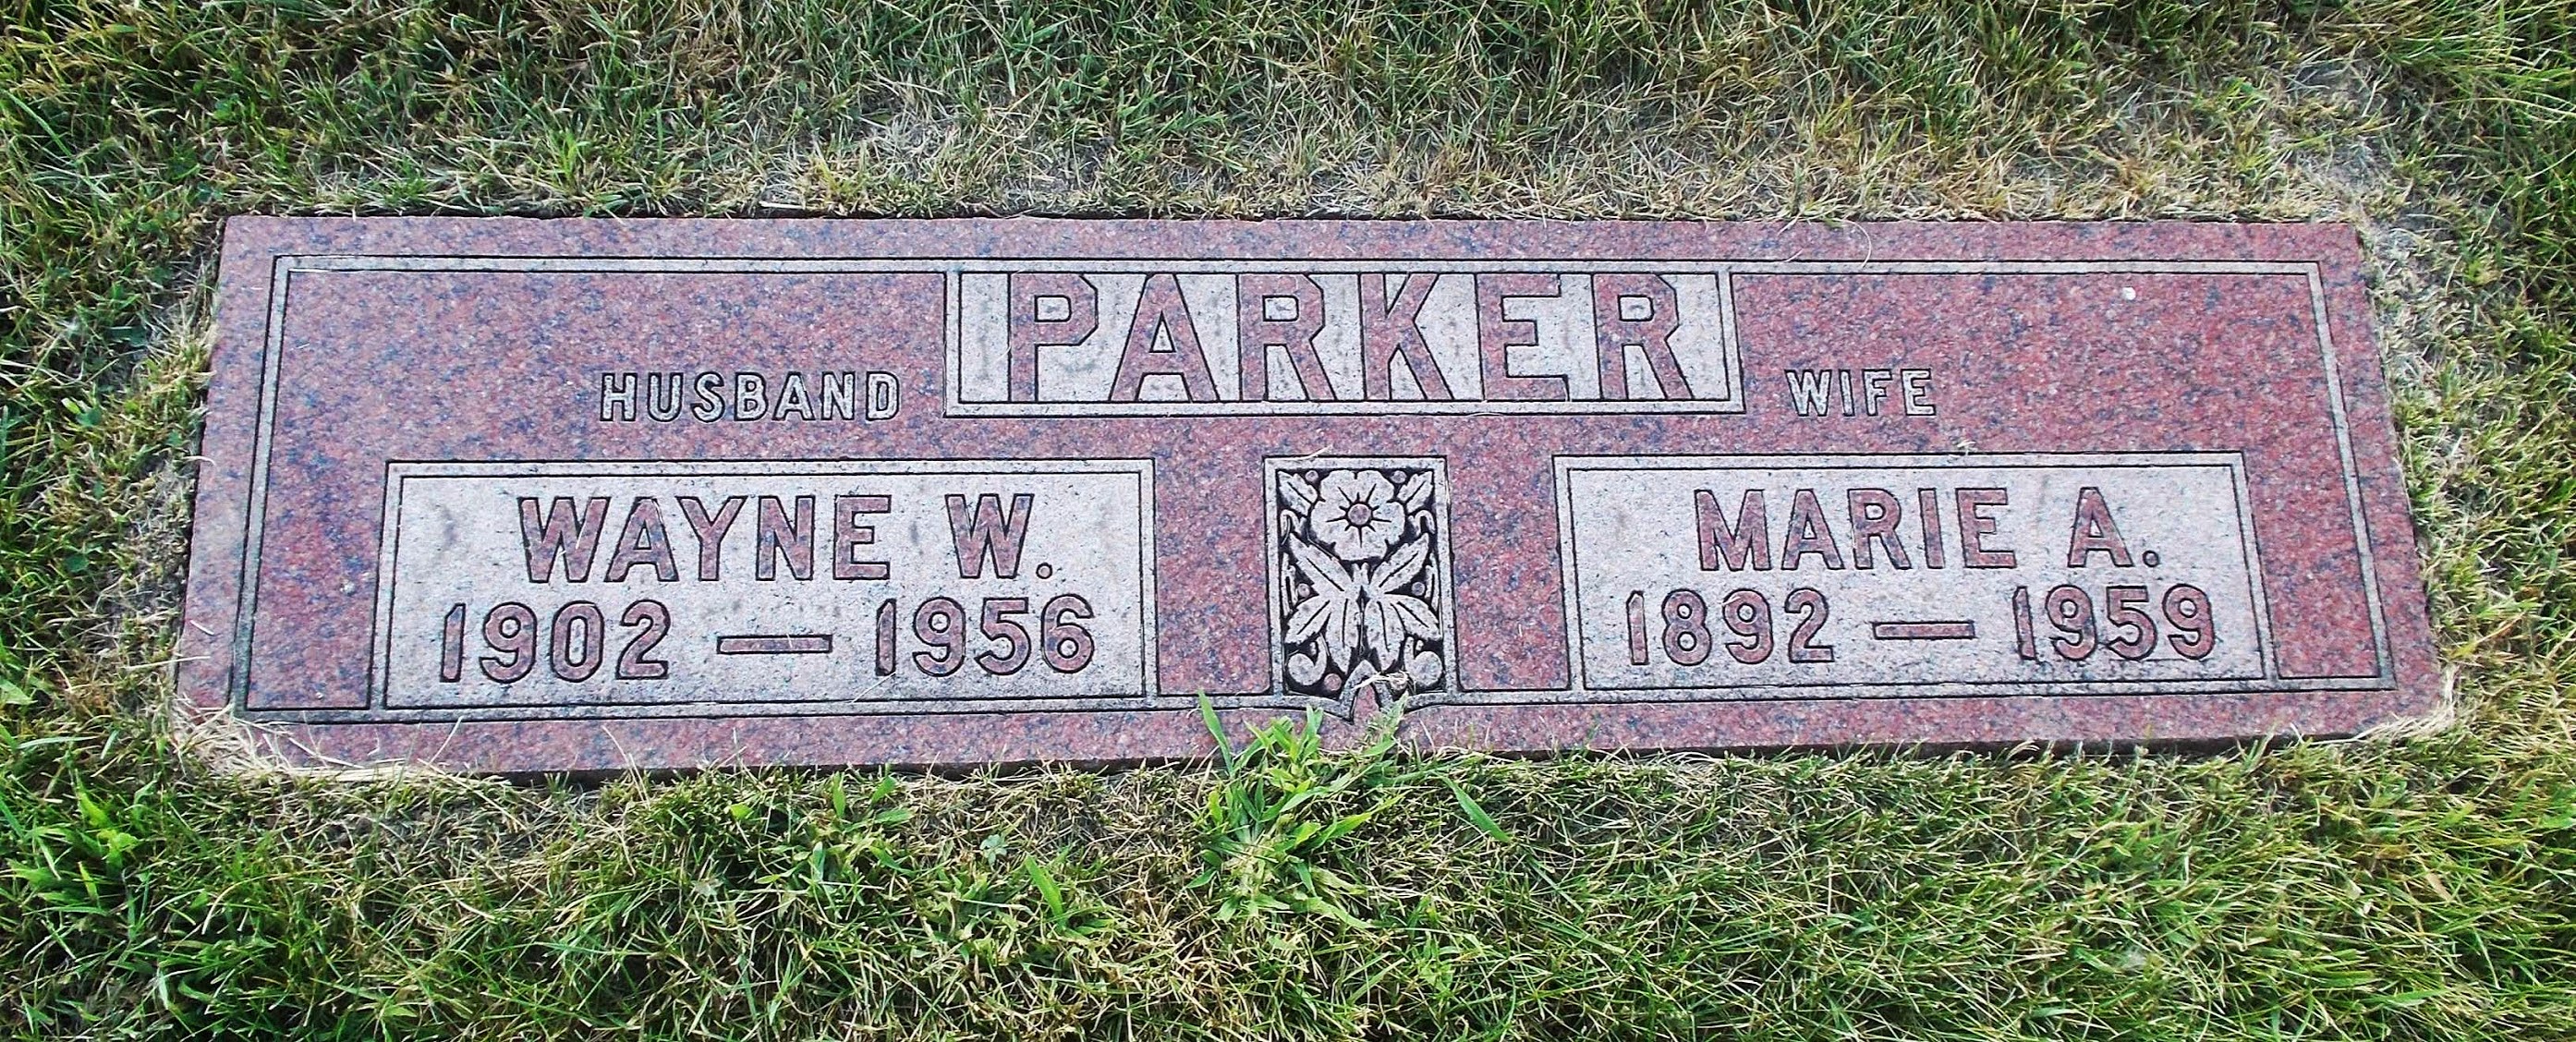 Wayne W Parker